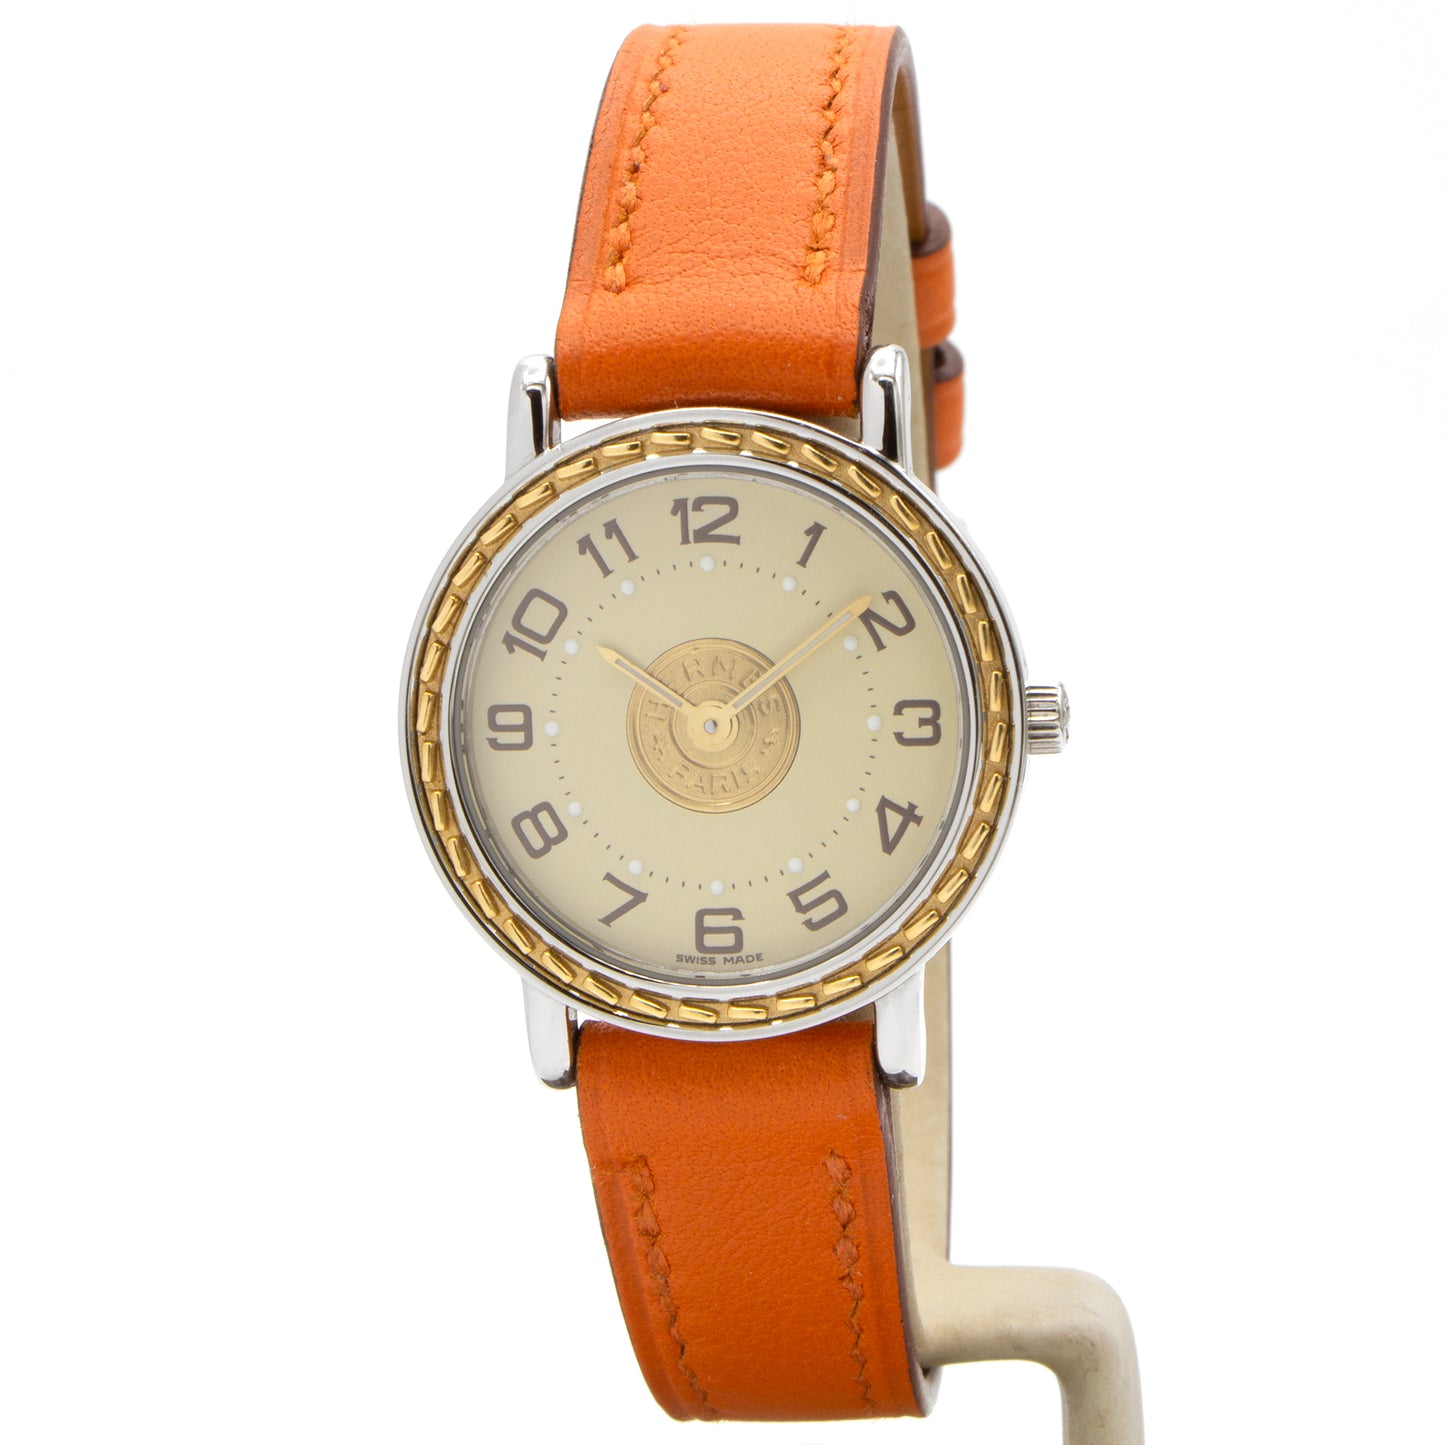 Hermes Sellier 24mm watch